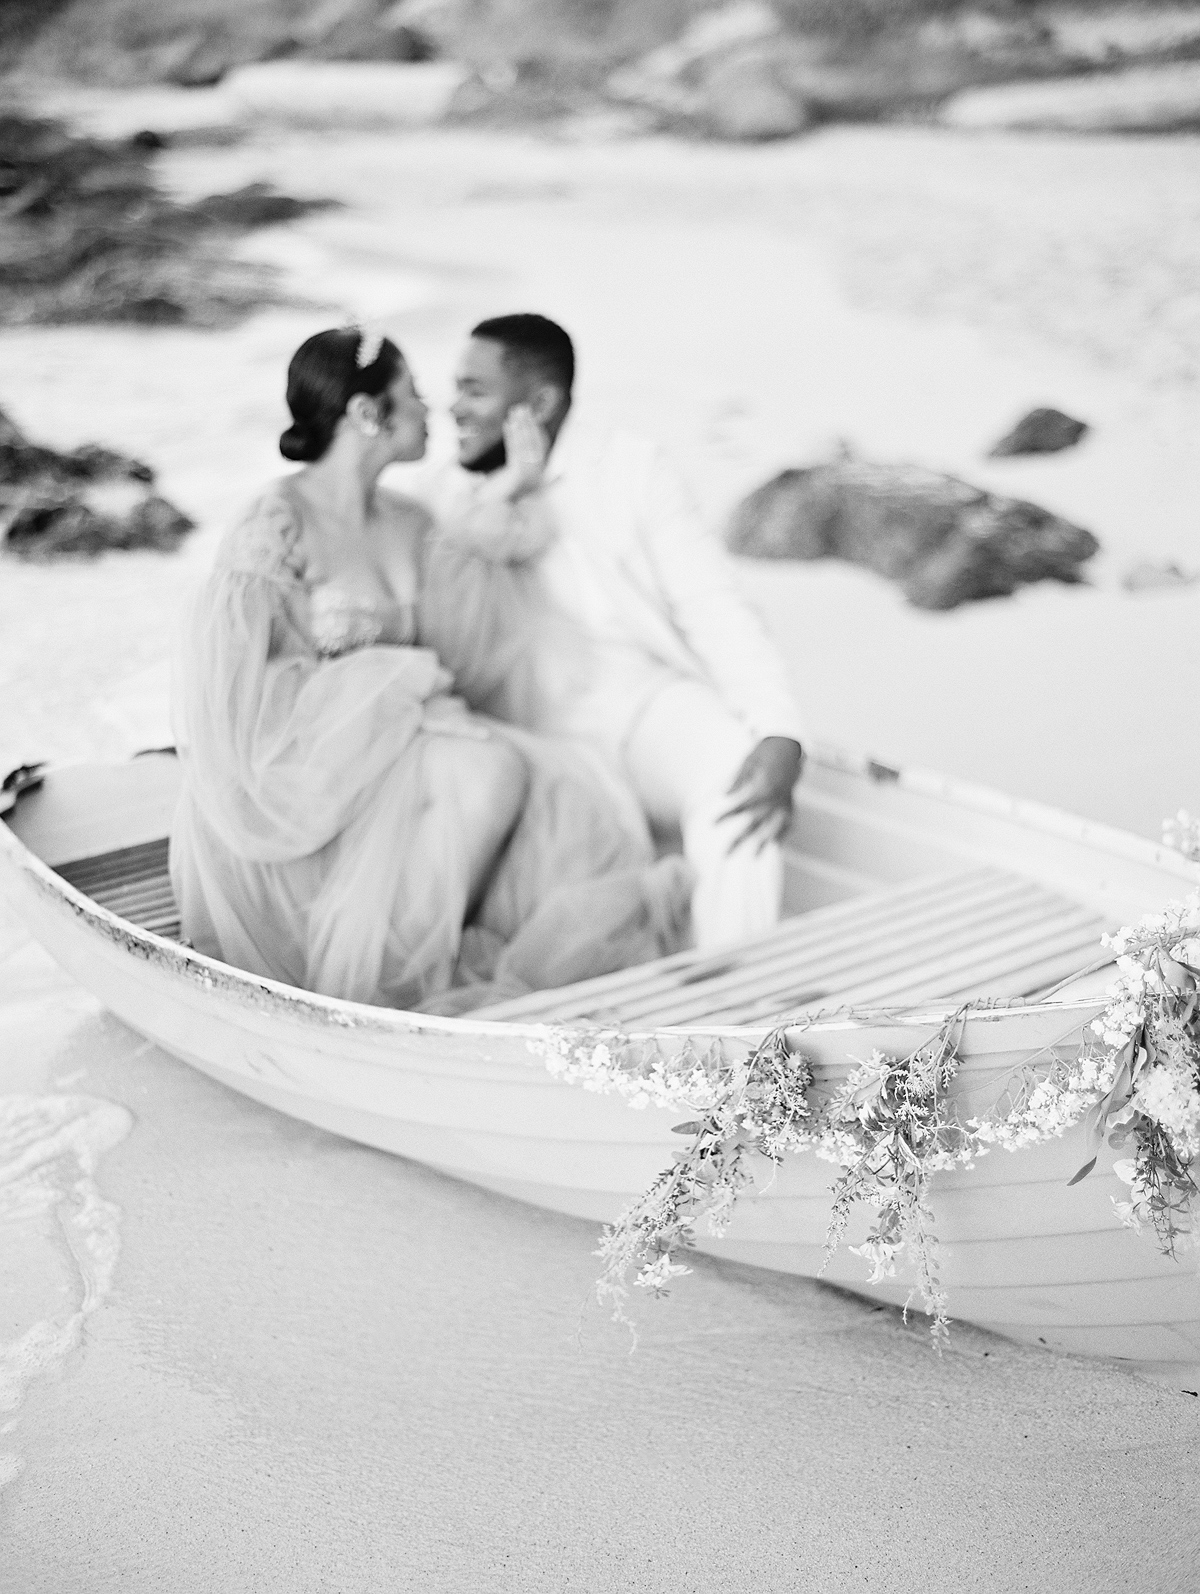 Hawaii elopement in Kailua by film photographer, Laura Ivanova